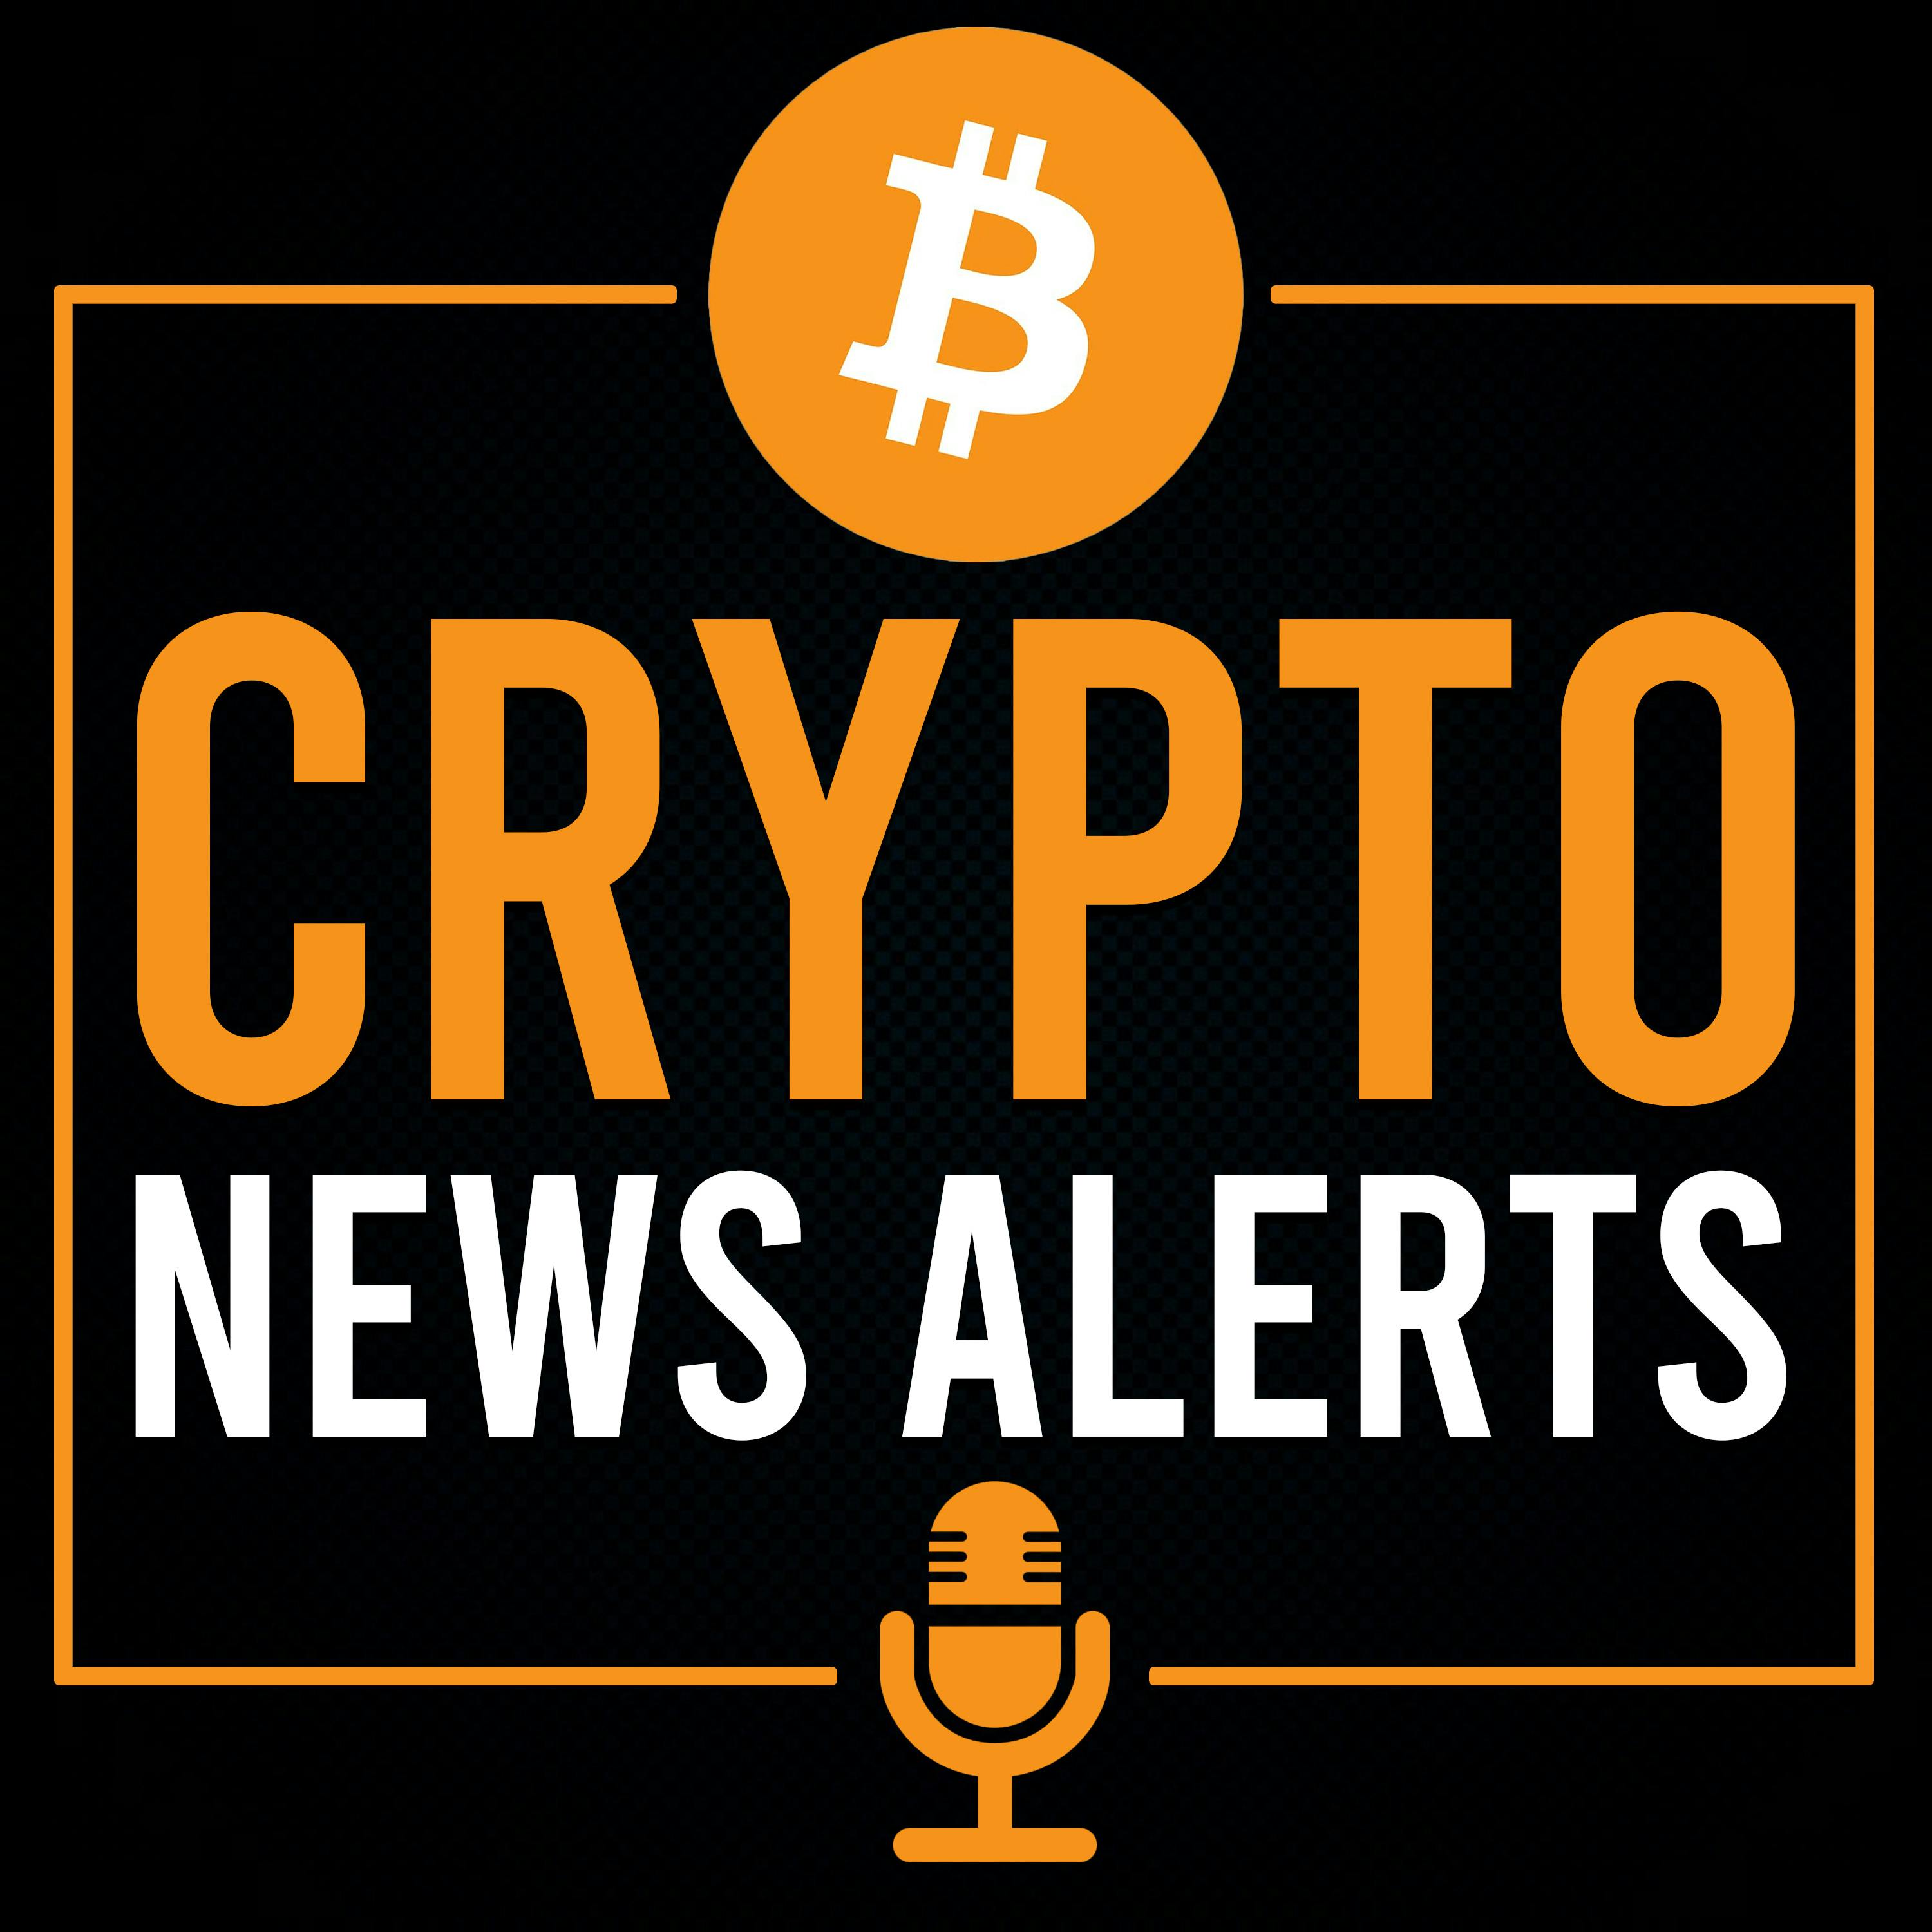 1612: “Bitcoin Will Reach Over $1 Million No Doubt”